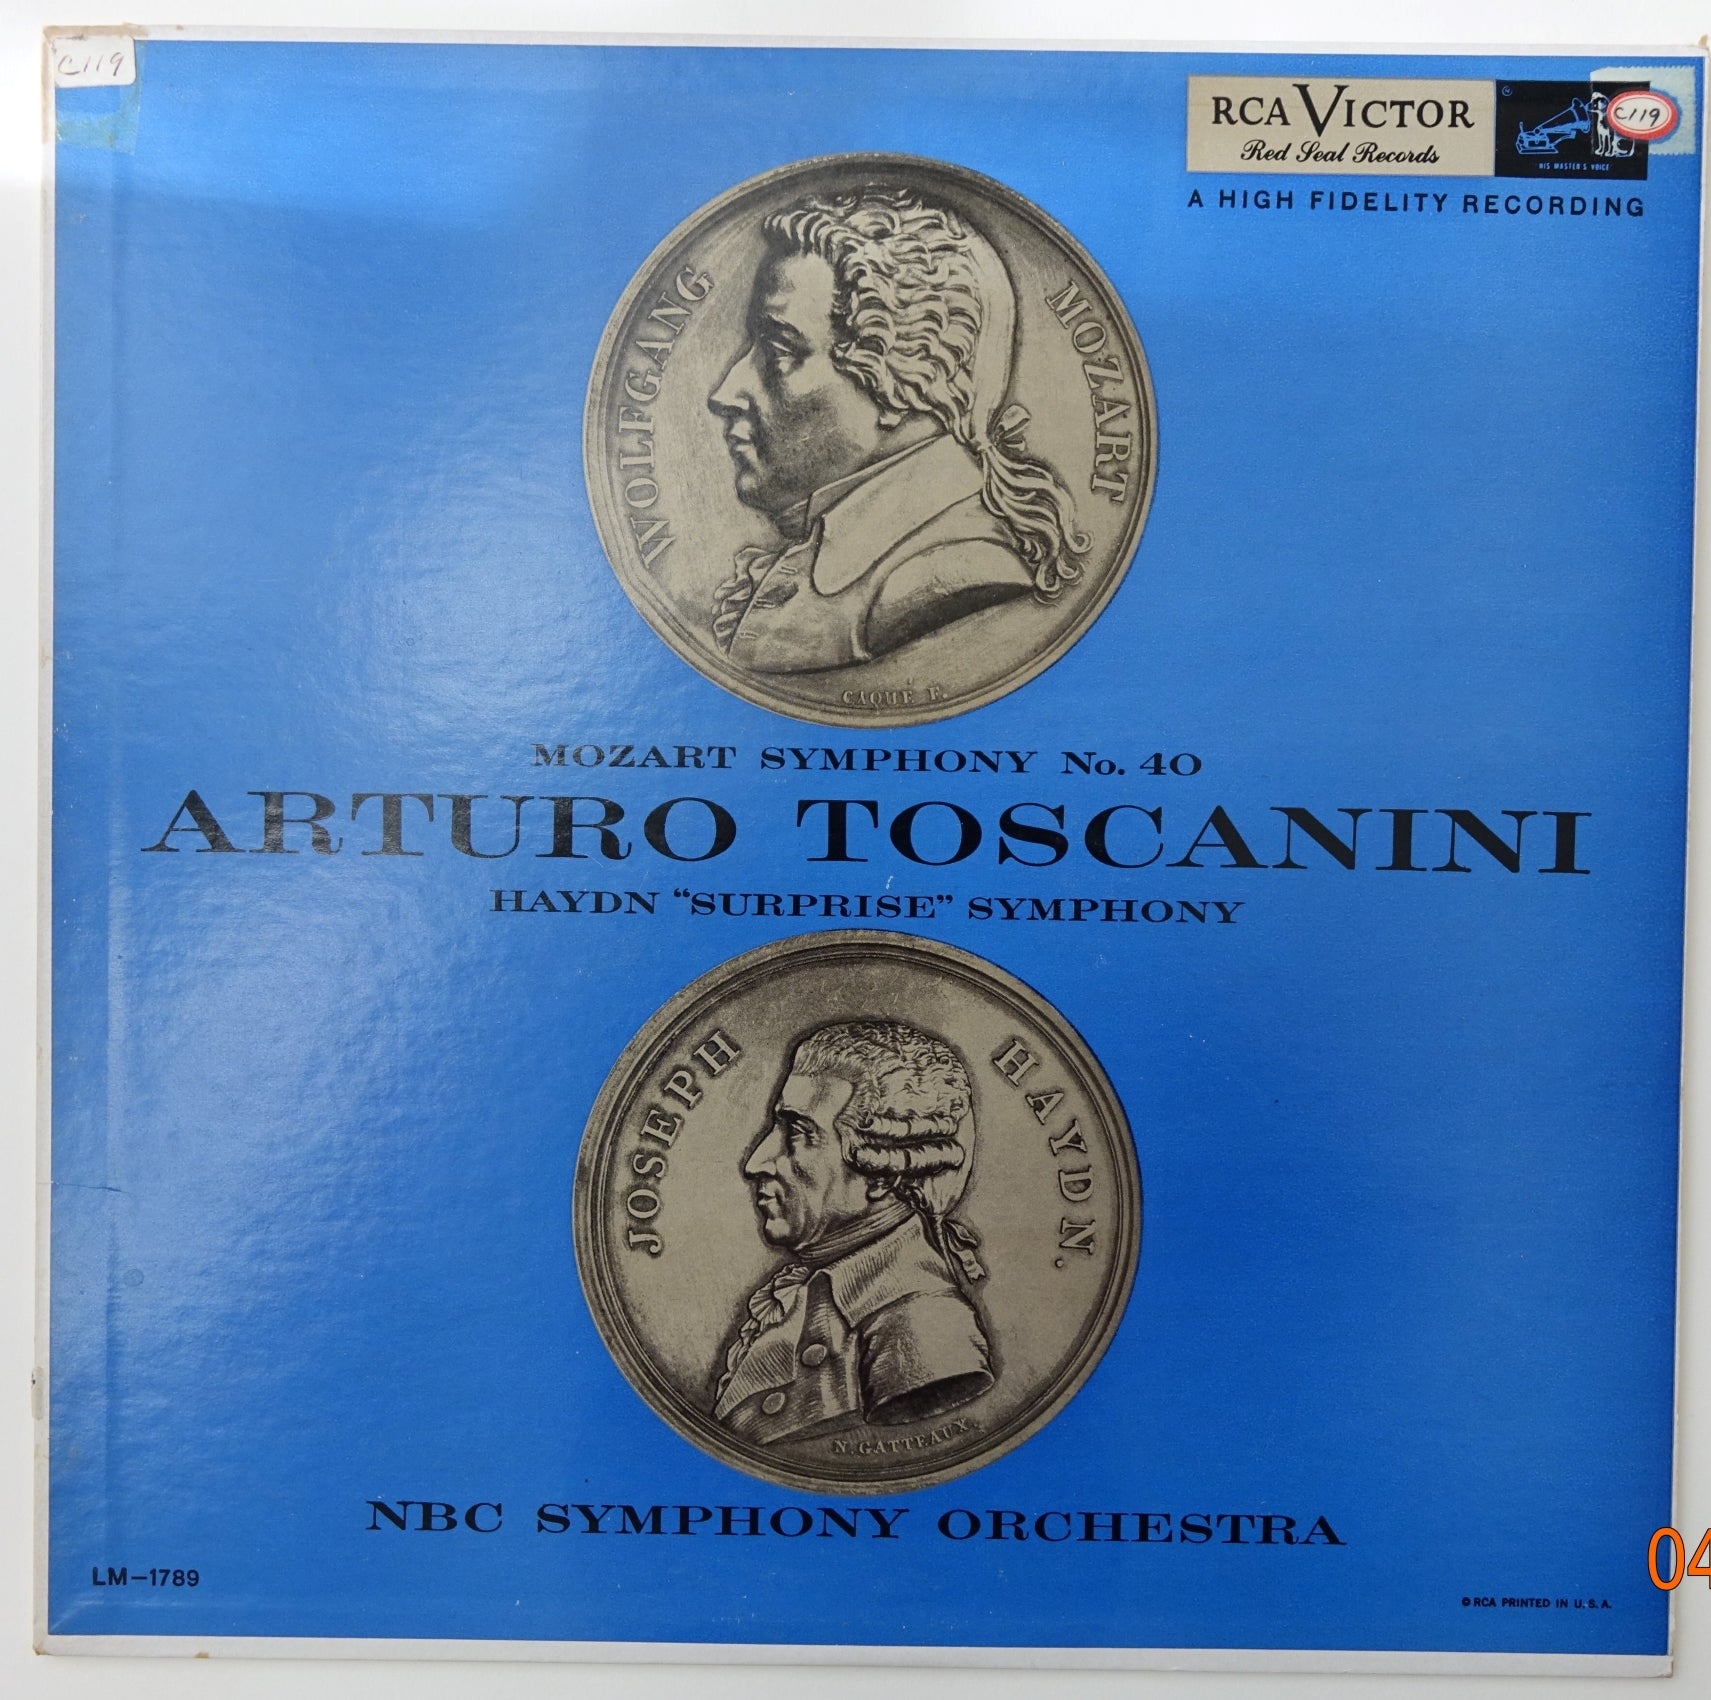 RCA008: Arturo Toscanini - Mozart Symphony No. 40